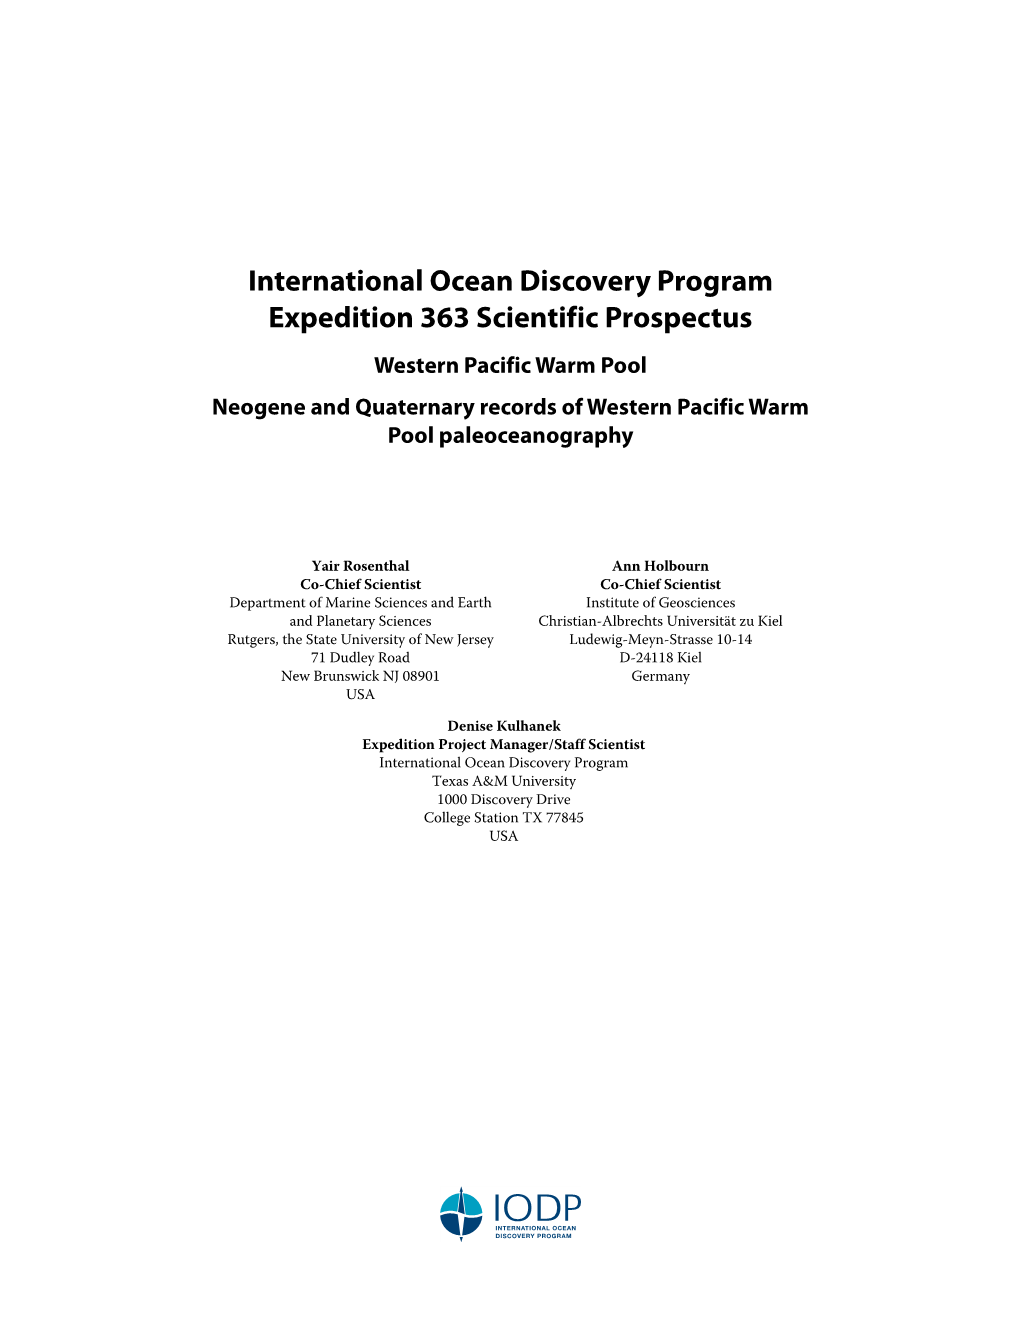 International Ocean Discovery Program Expedition 363 Scientific